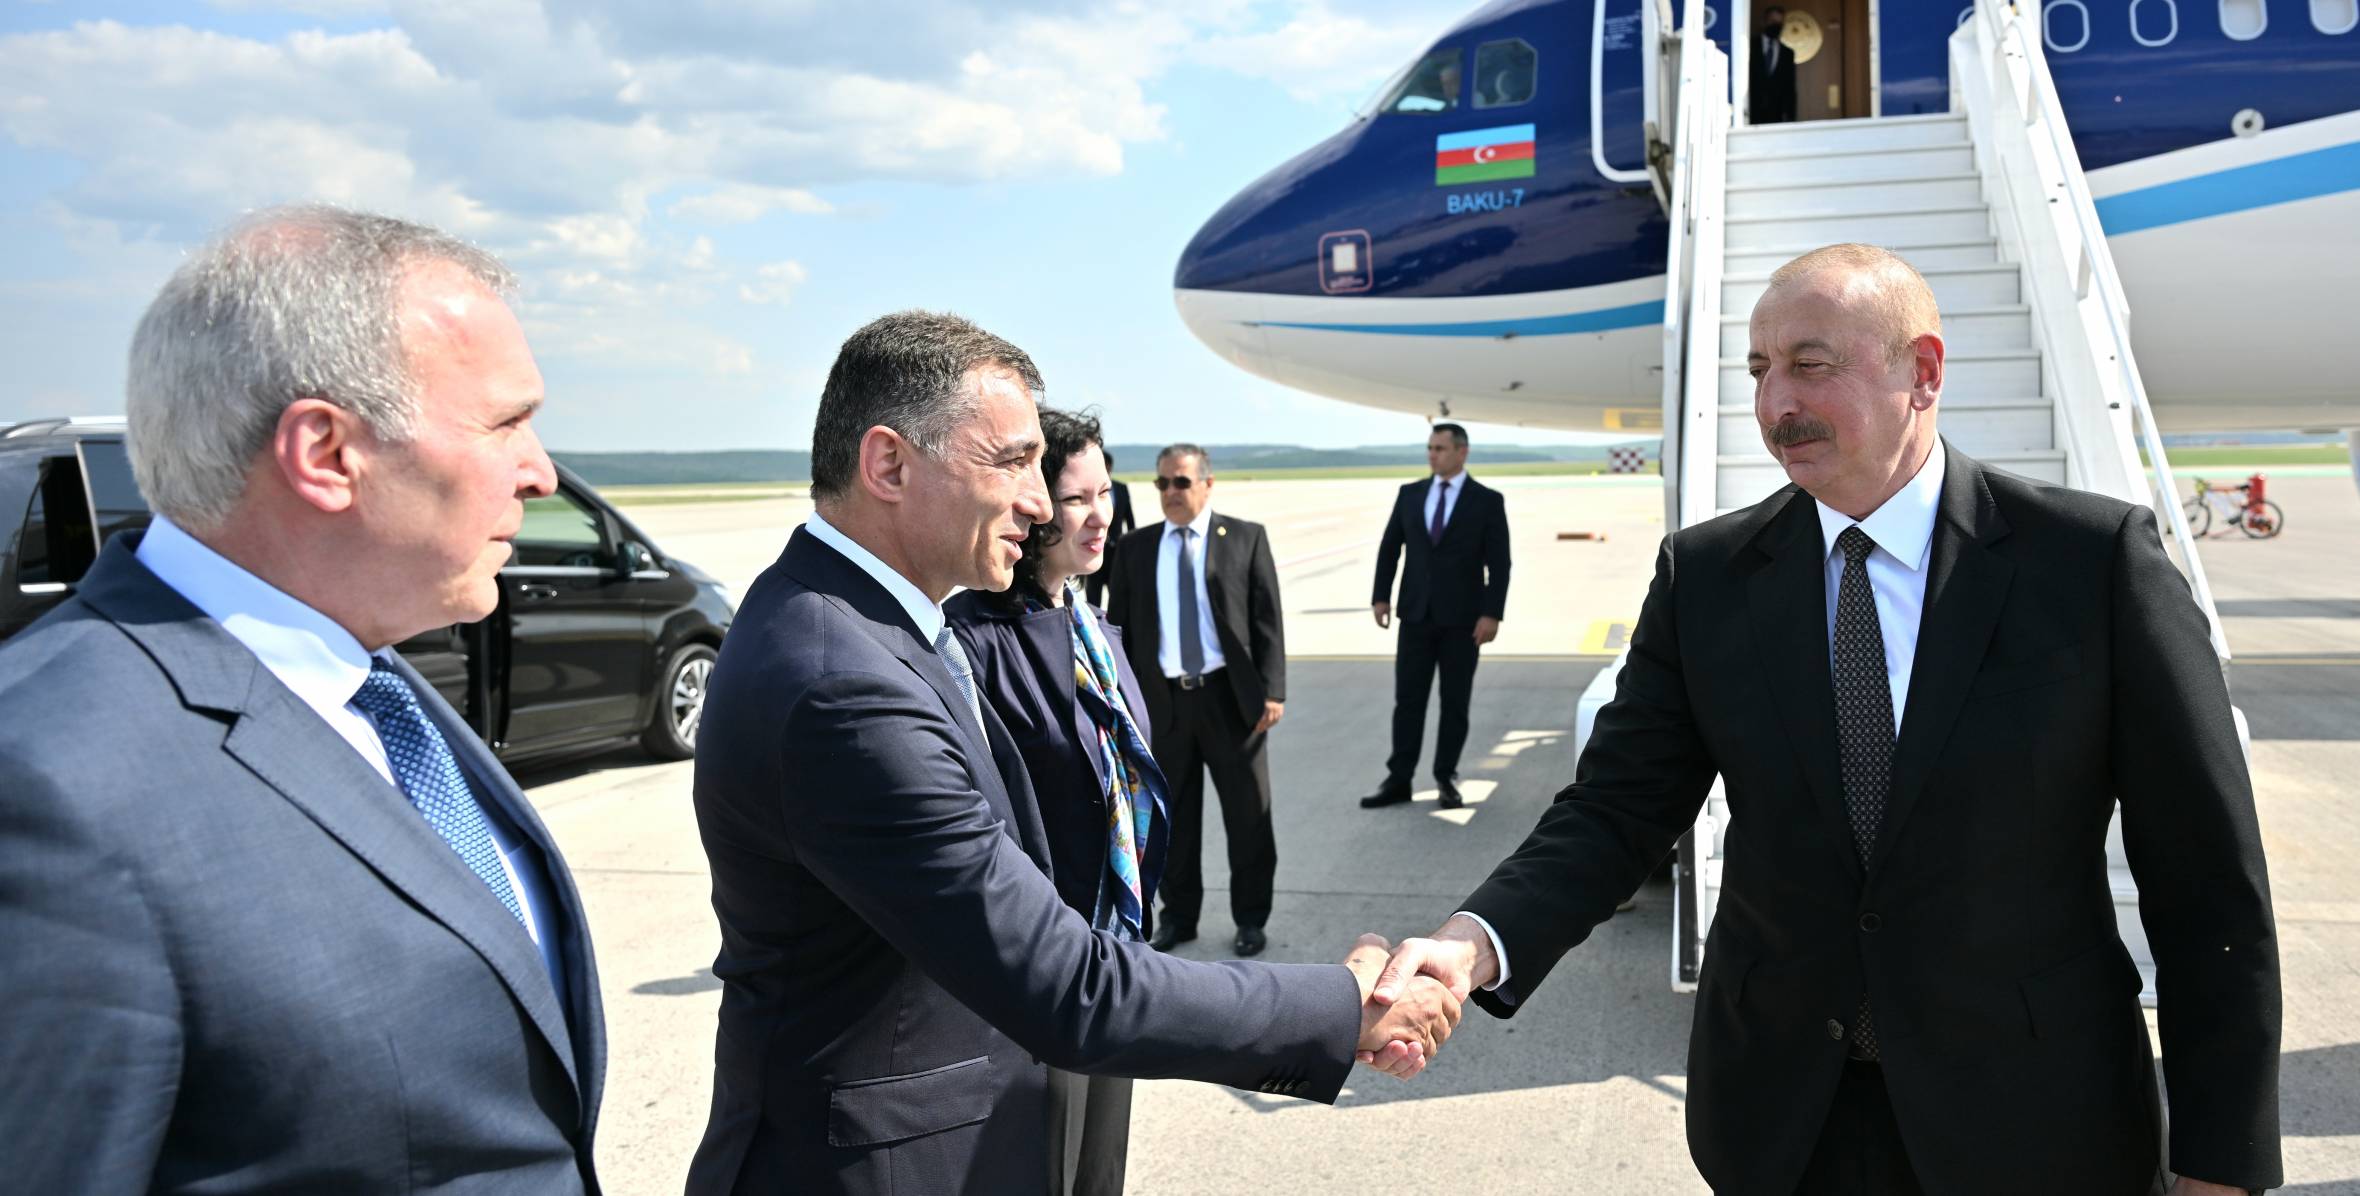 Ilham Aliyev embarked on visit to Moldova